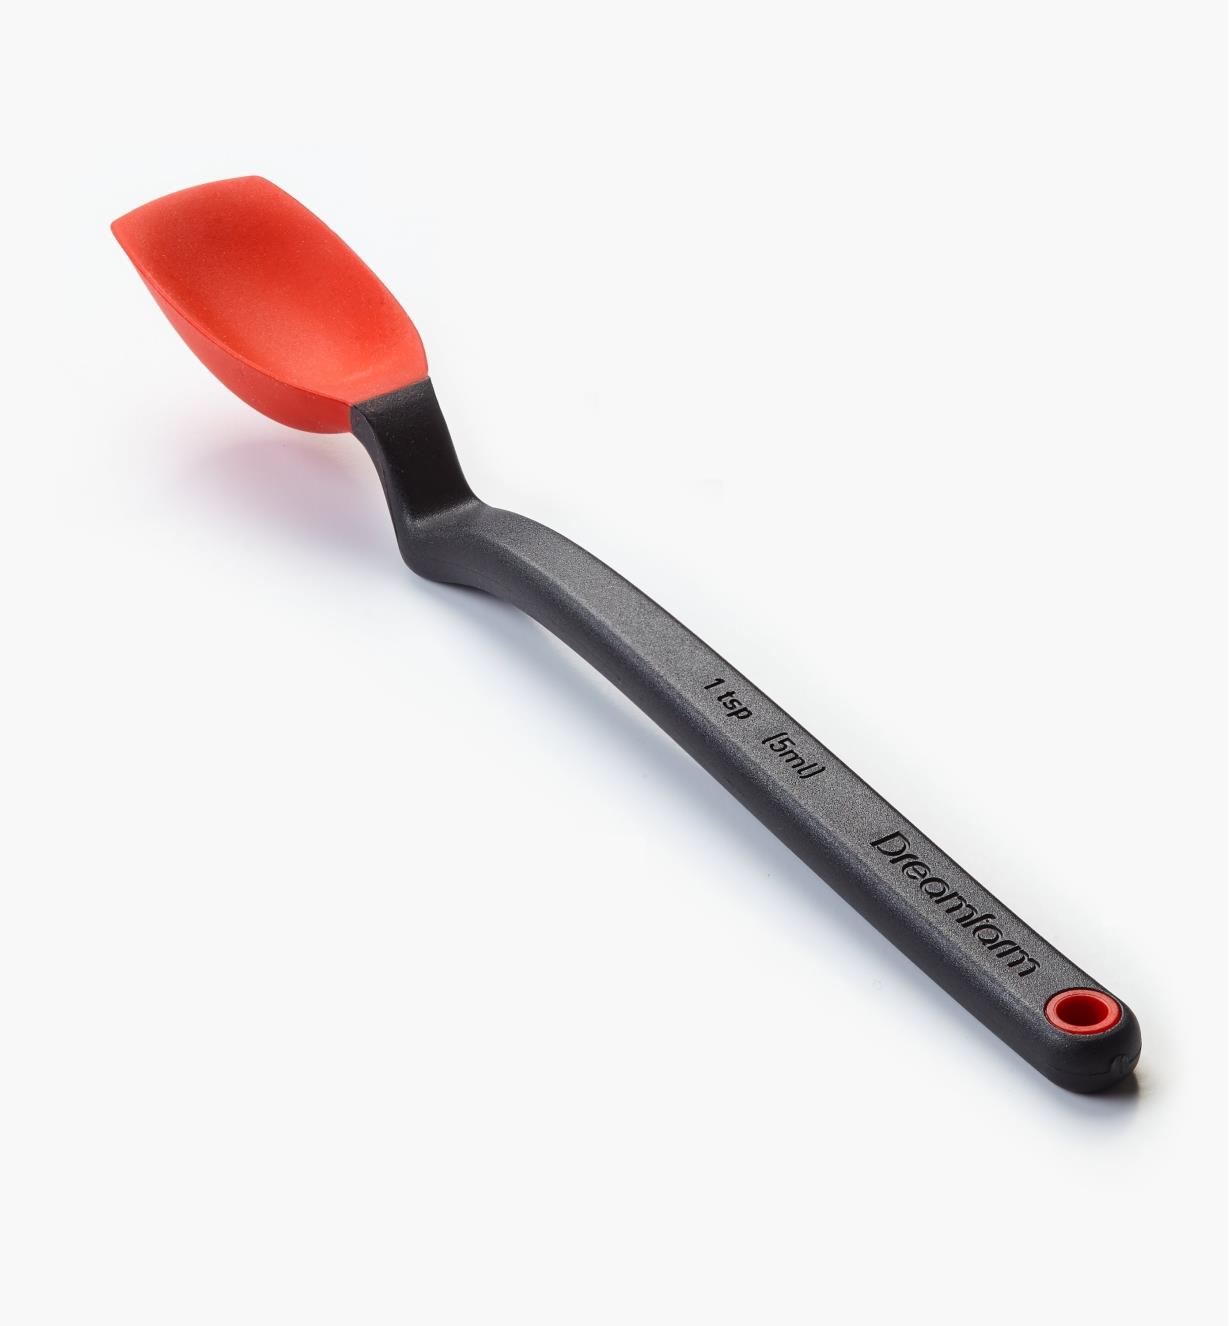 EV431 - Petite cuillère-spatule